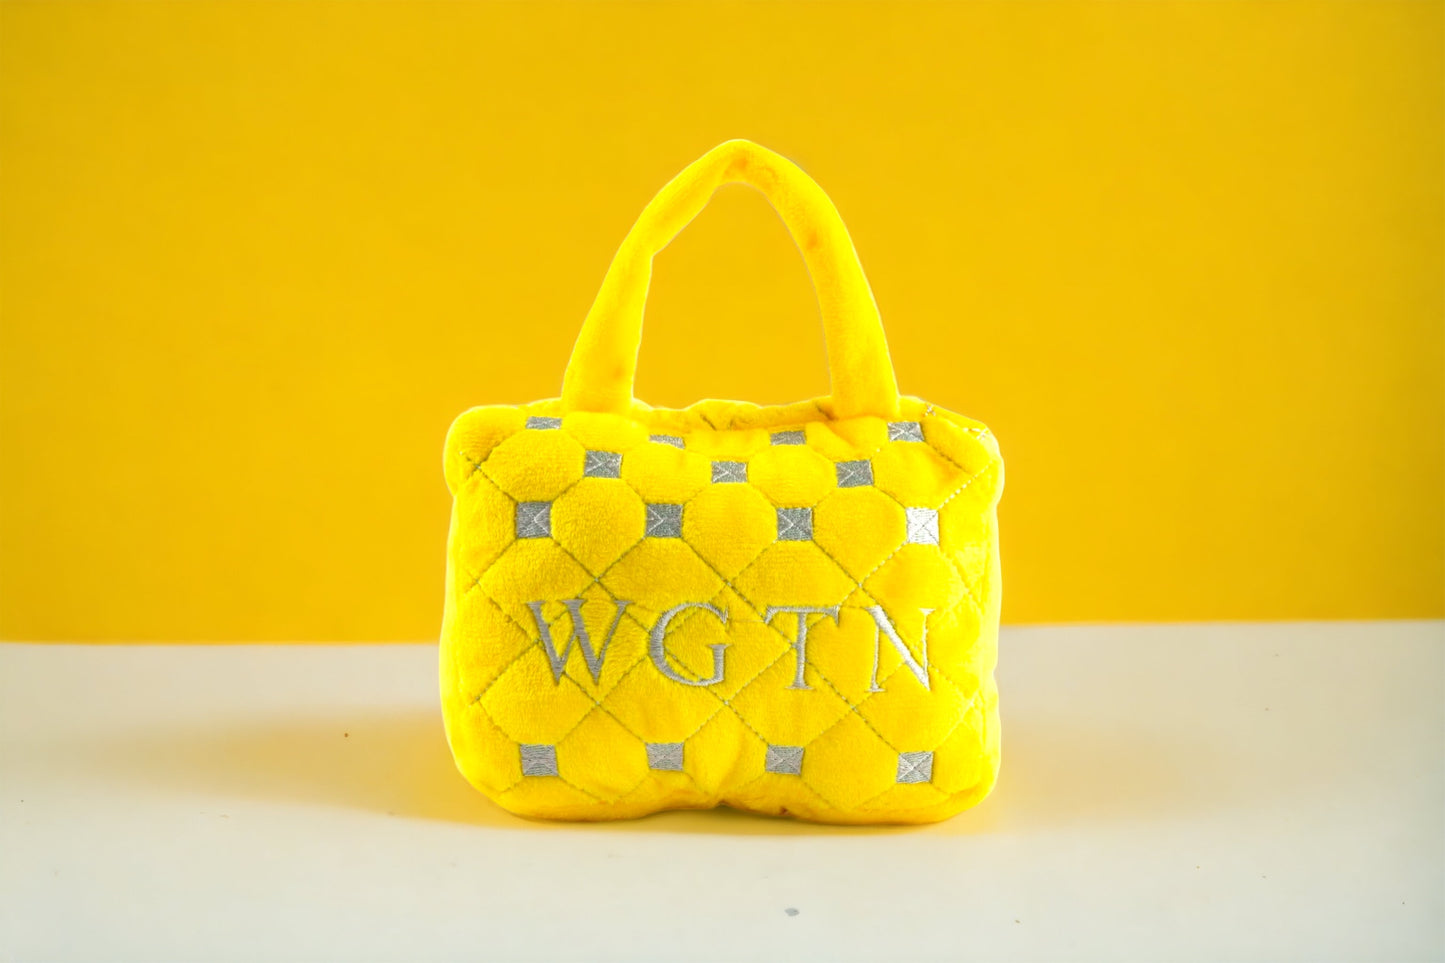 Wagentino Handbag Squeaker Toy